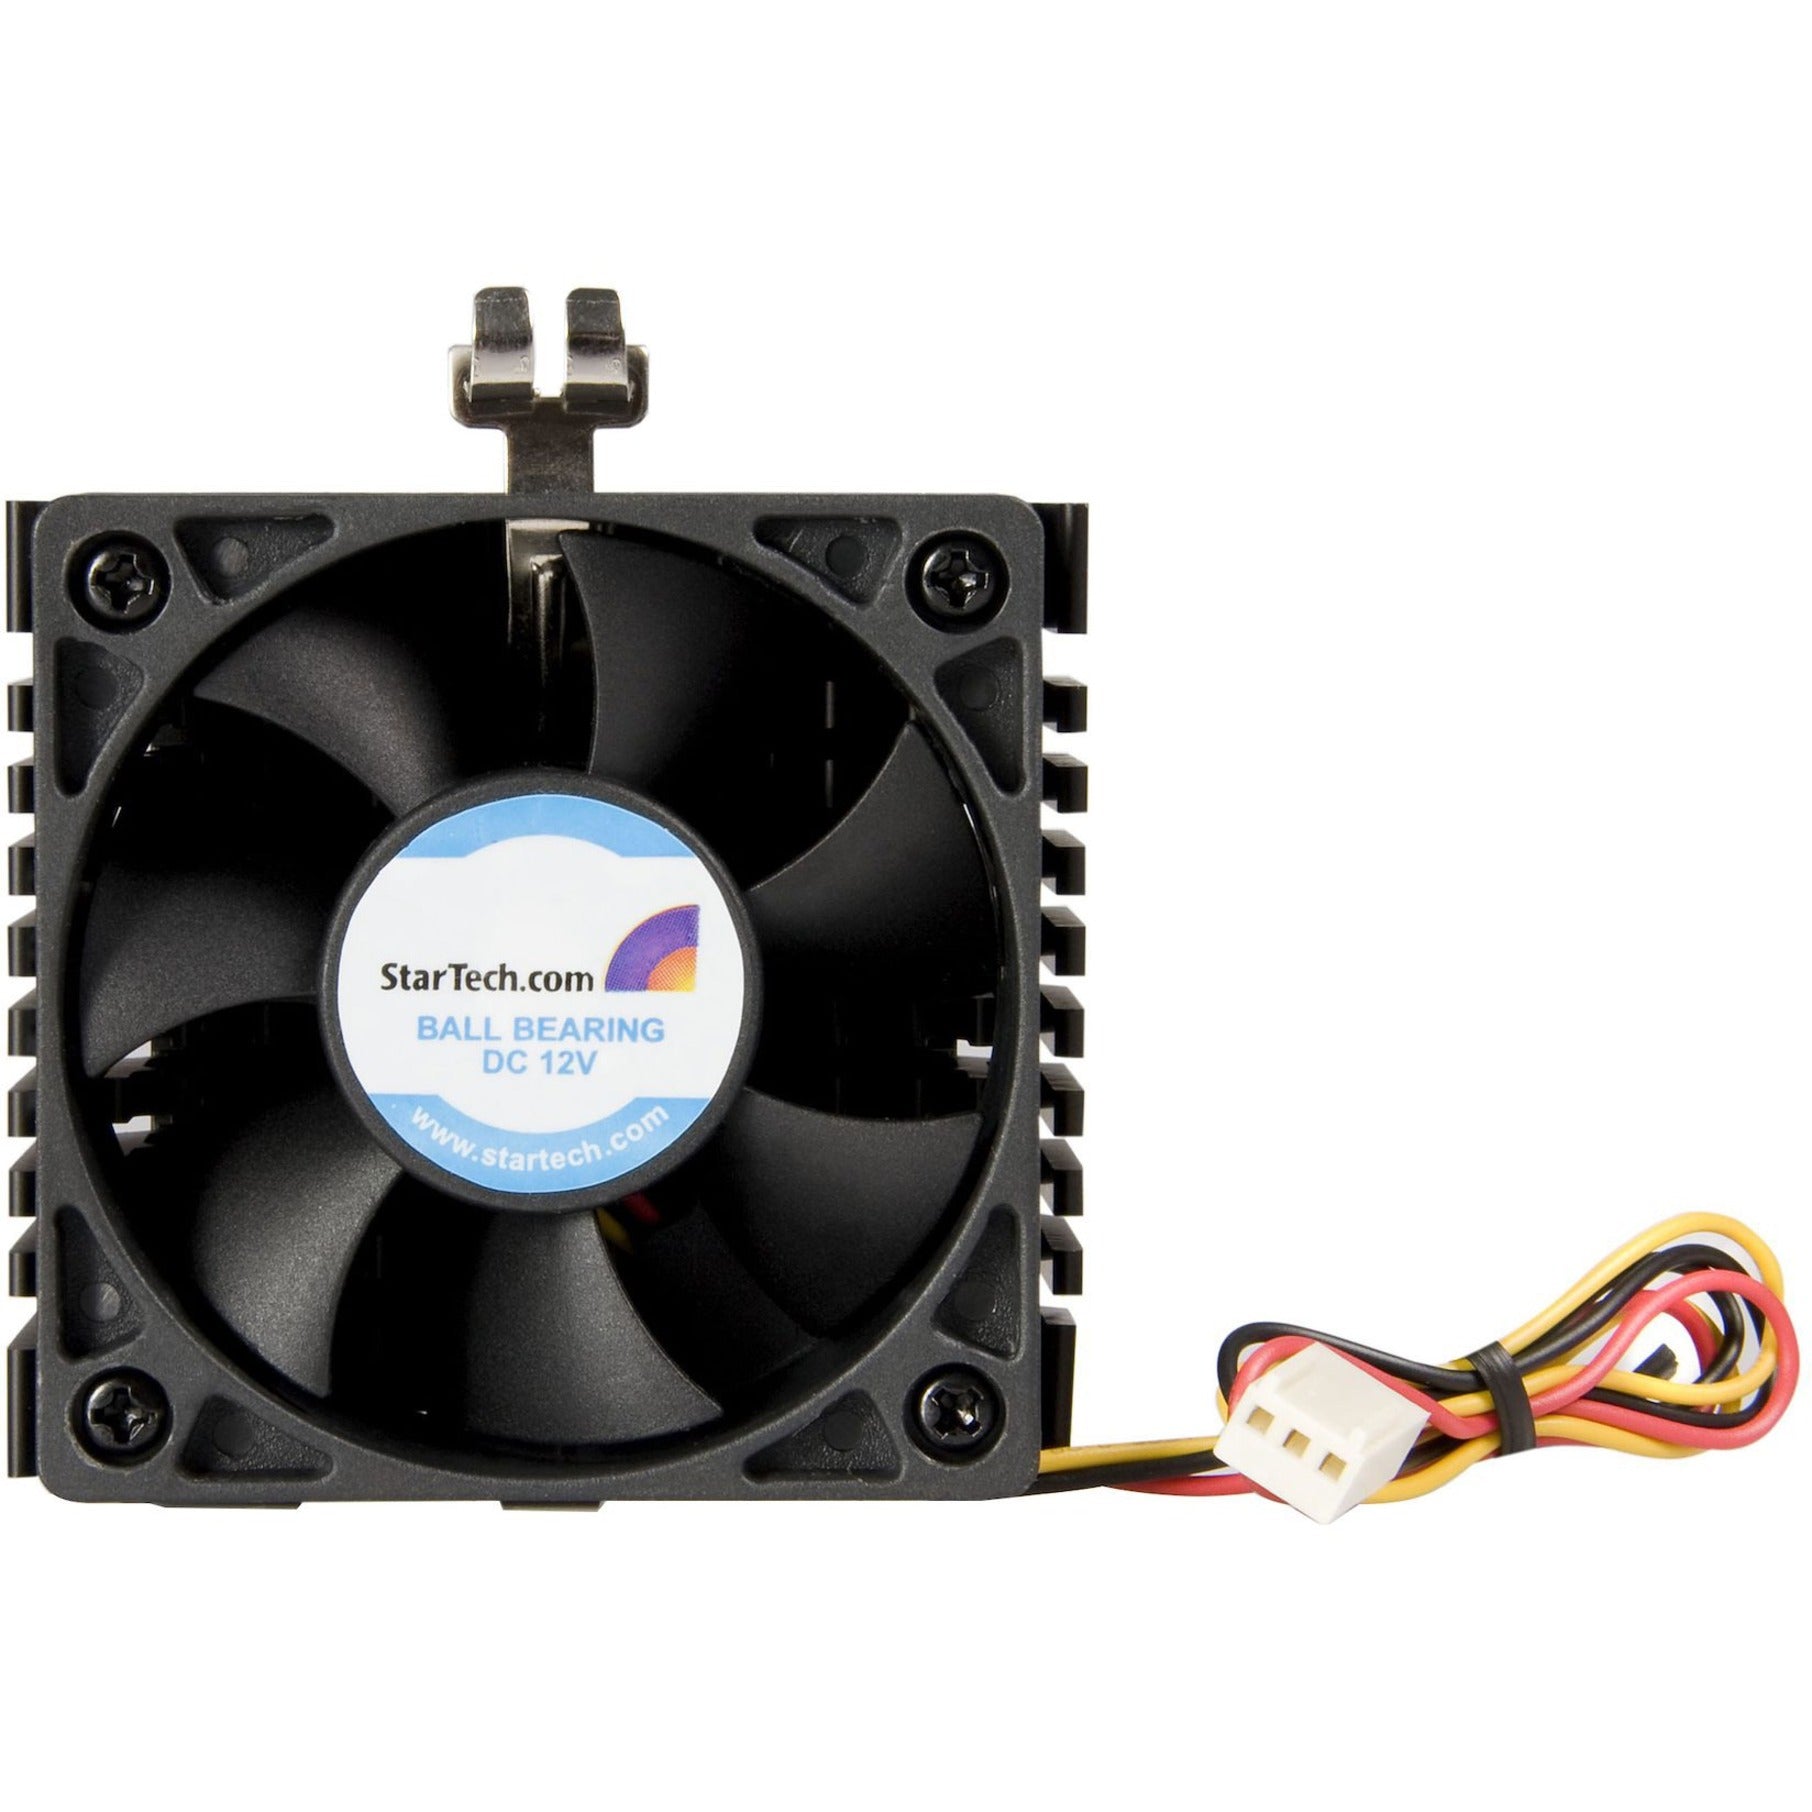 StarTech.com FAN370PRO Socket 7/370 CPU Cooler Fan w/ Heatsink, Cools PC, Extends Component Lifetime